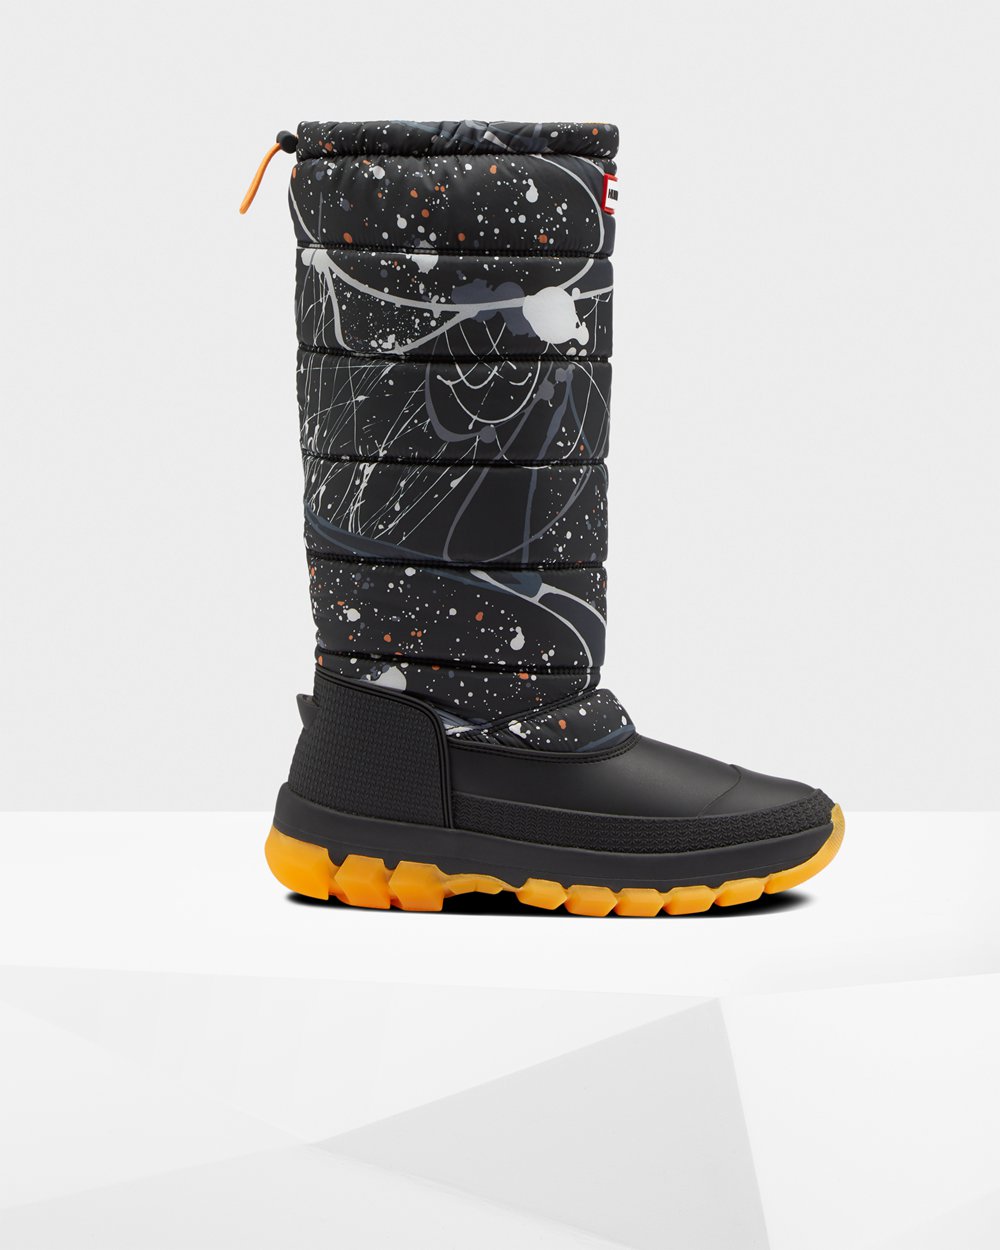 Womens Snow Boots - Hunter Original Printed Insulated Tall (52WSXFBHD) - Grey Black